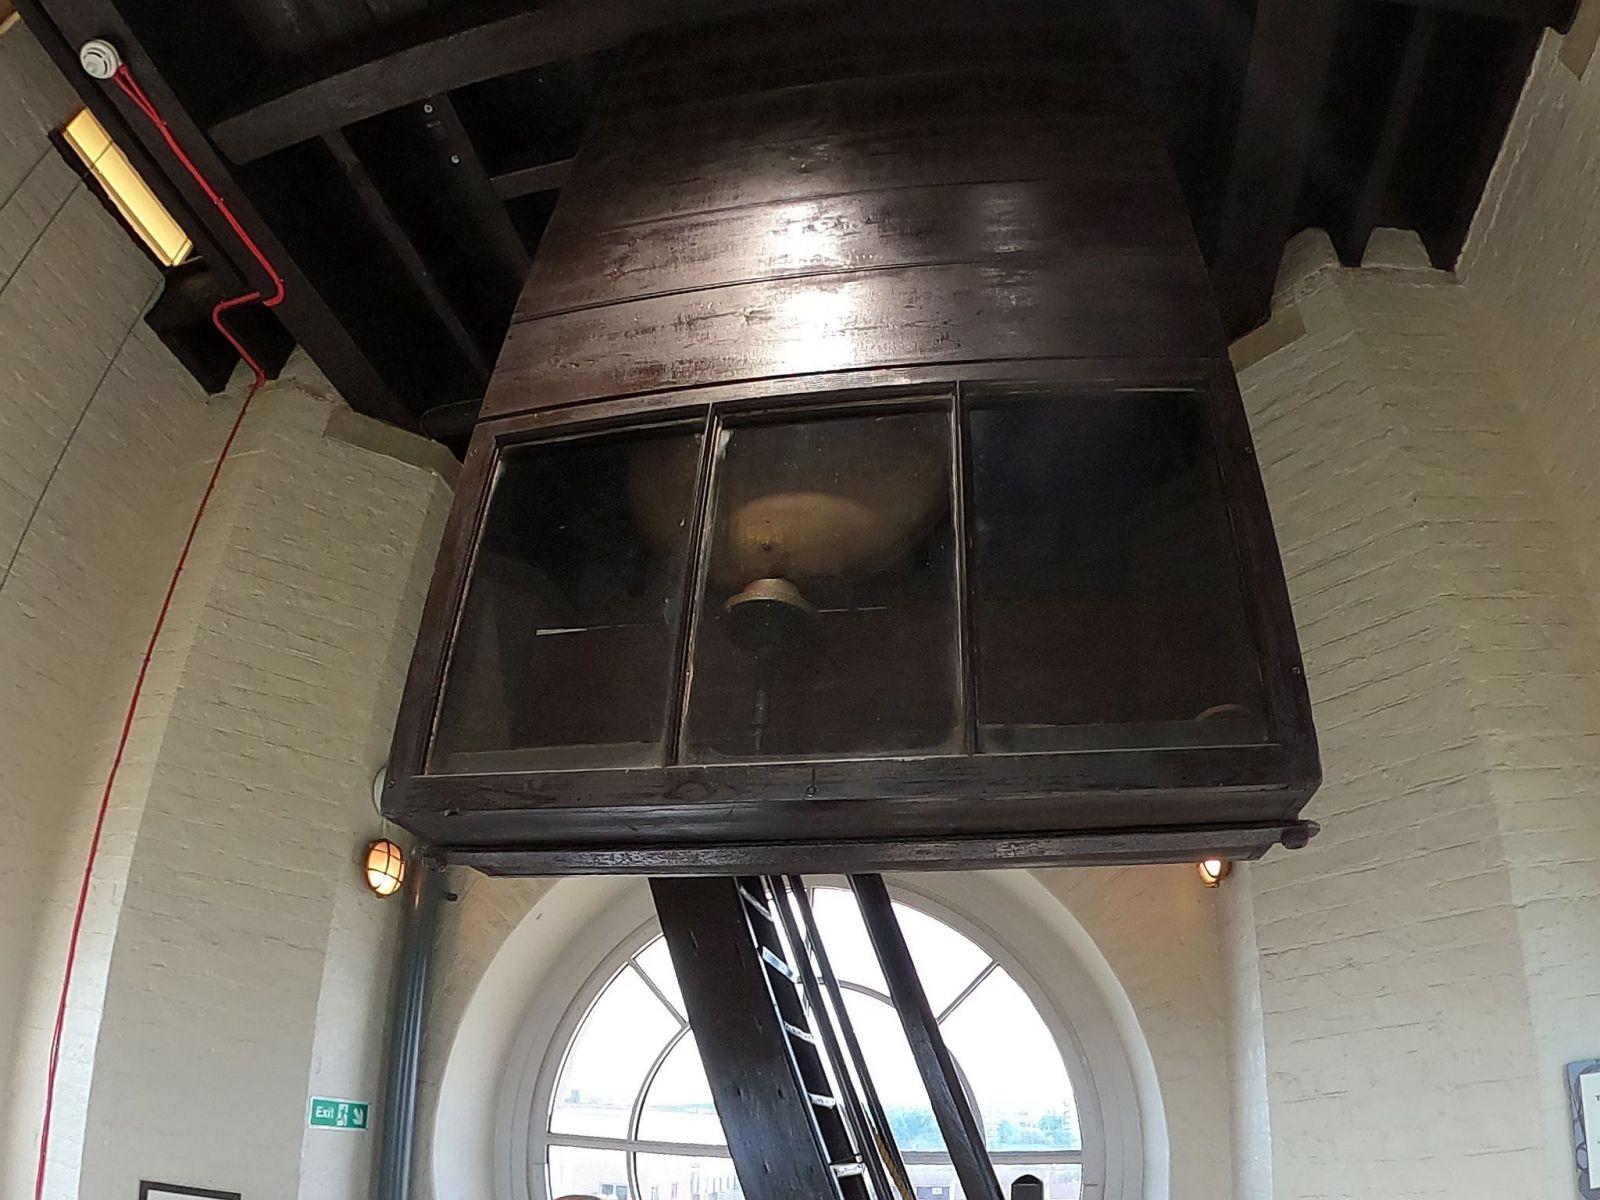 The pendulum of the clock mechanism of the Caledonian Park Clock Tower